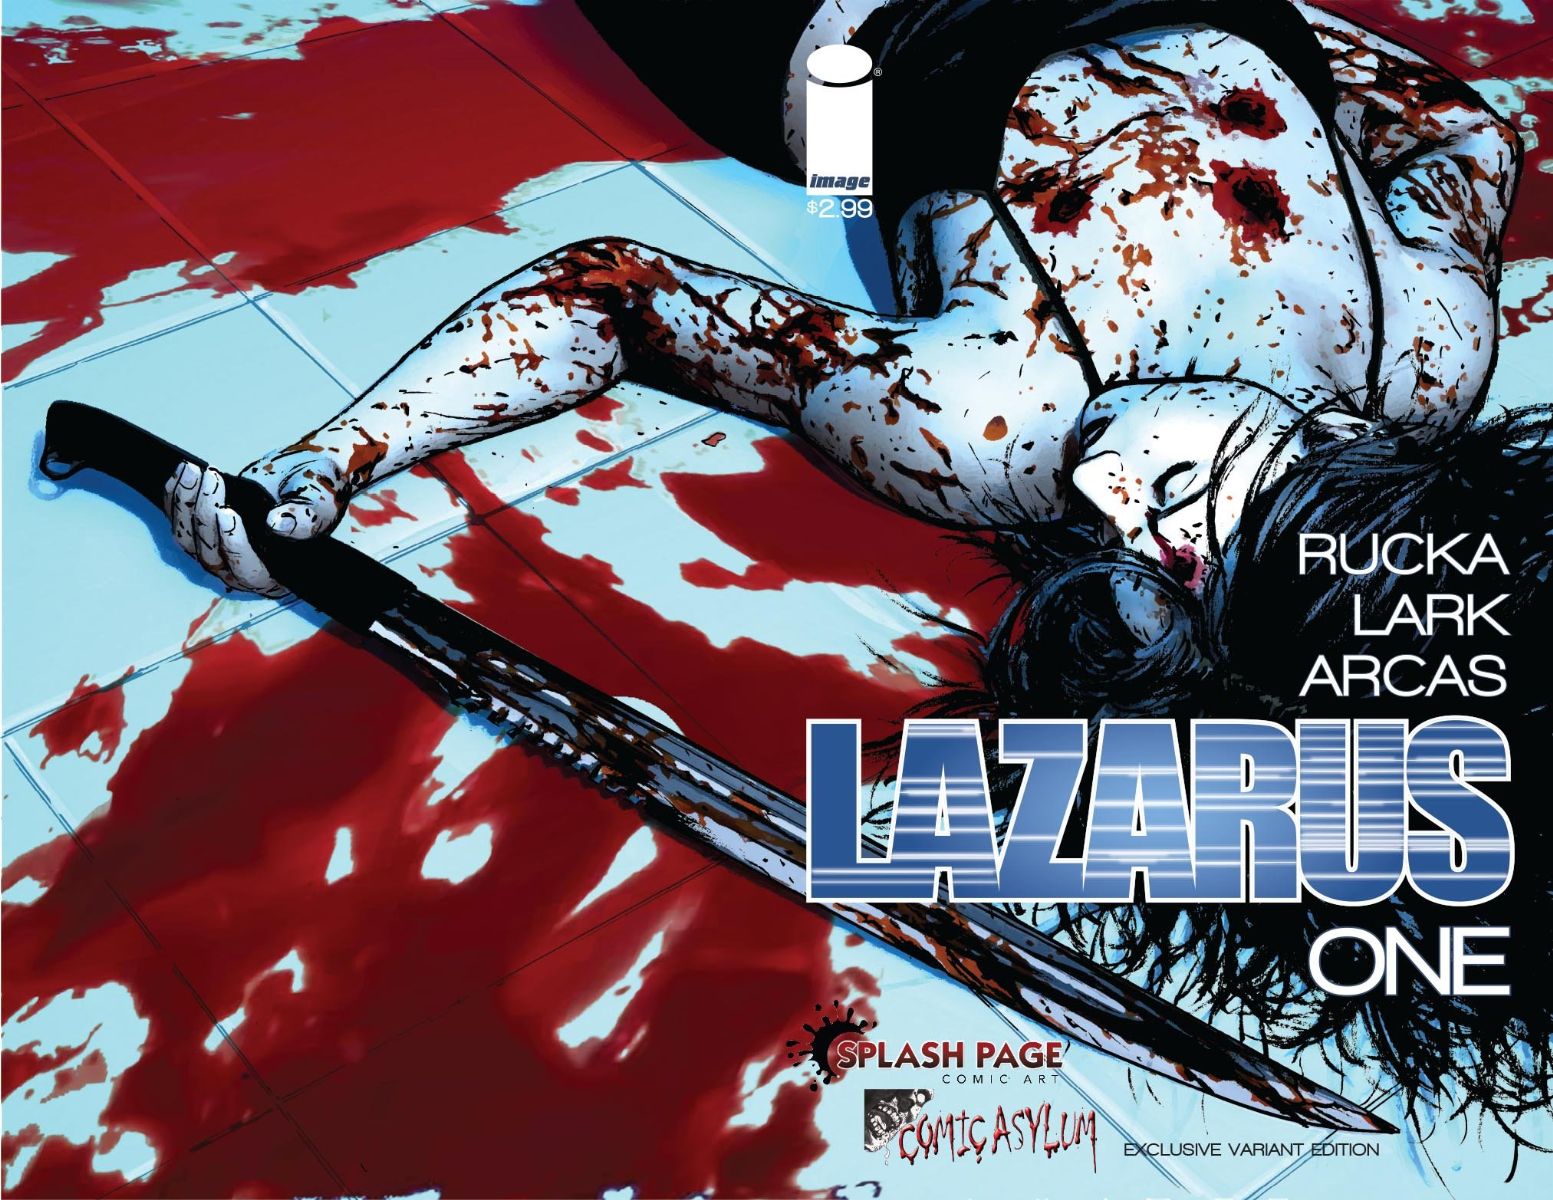 Splash Page Comic Art & Comic Asylum Retailer Variant of Lazarus Issue 1